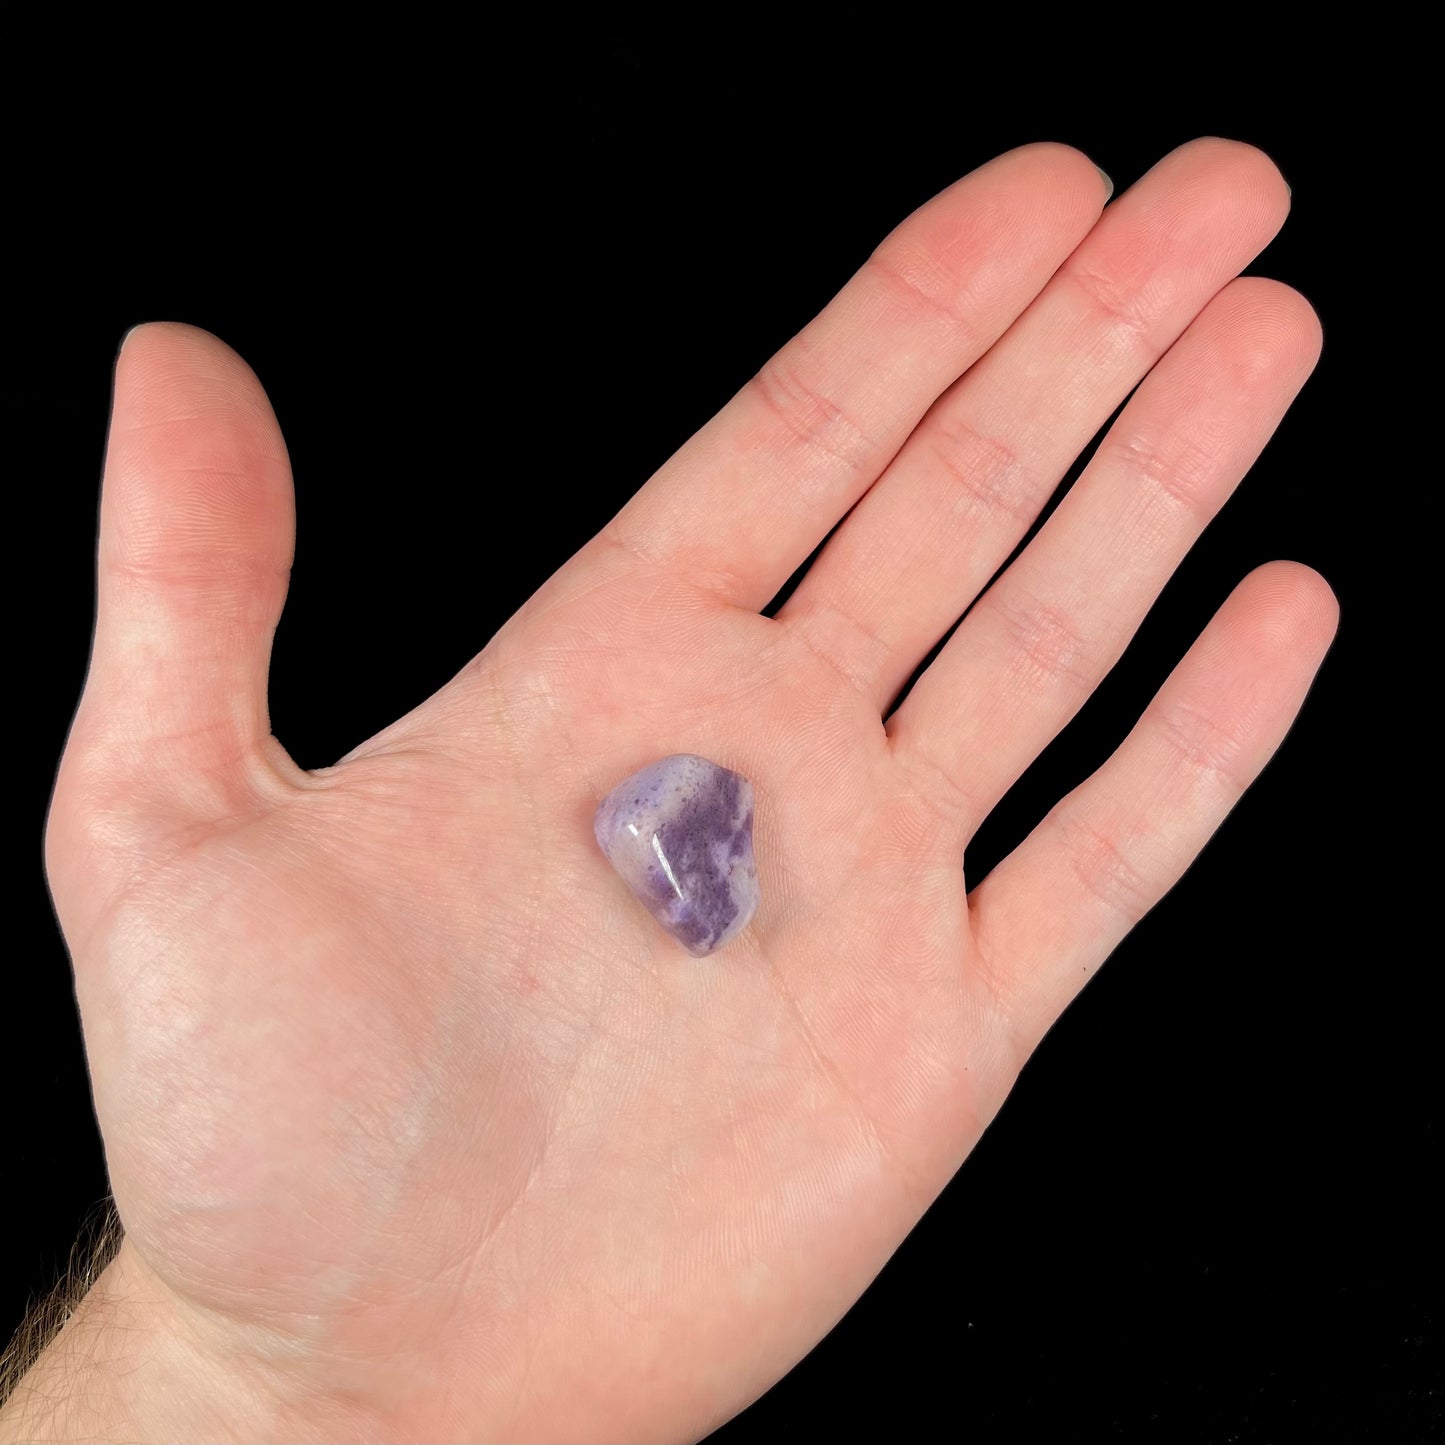 A streaked and spotted purple turkiyenite jade stone from Bursa, Turkey.